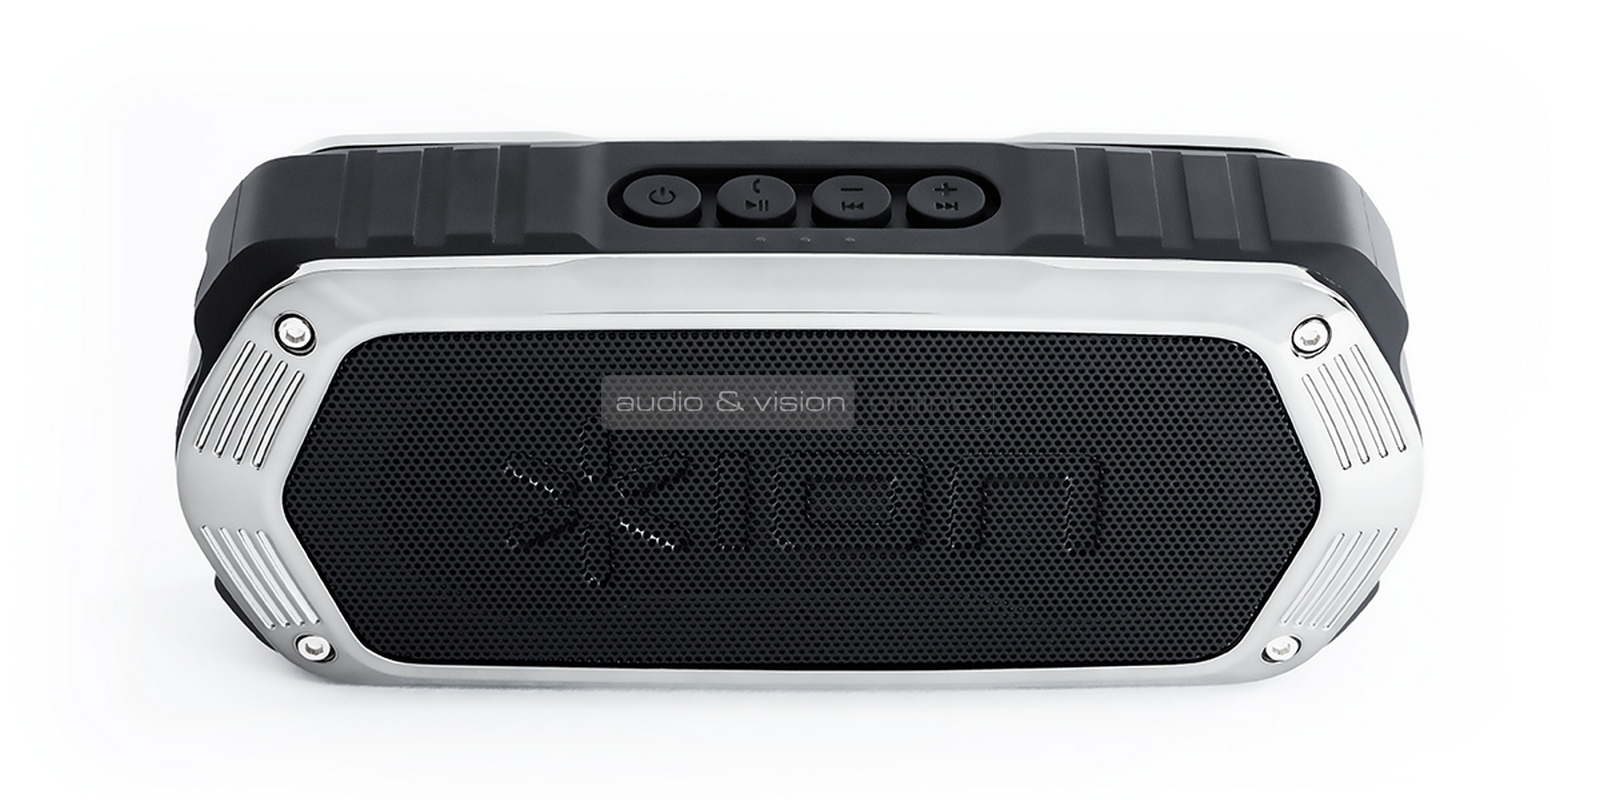 ION Audio Aquaboom Bluetooth hangrendszer